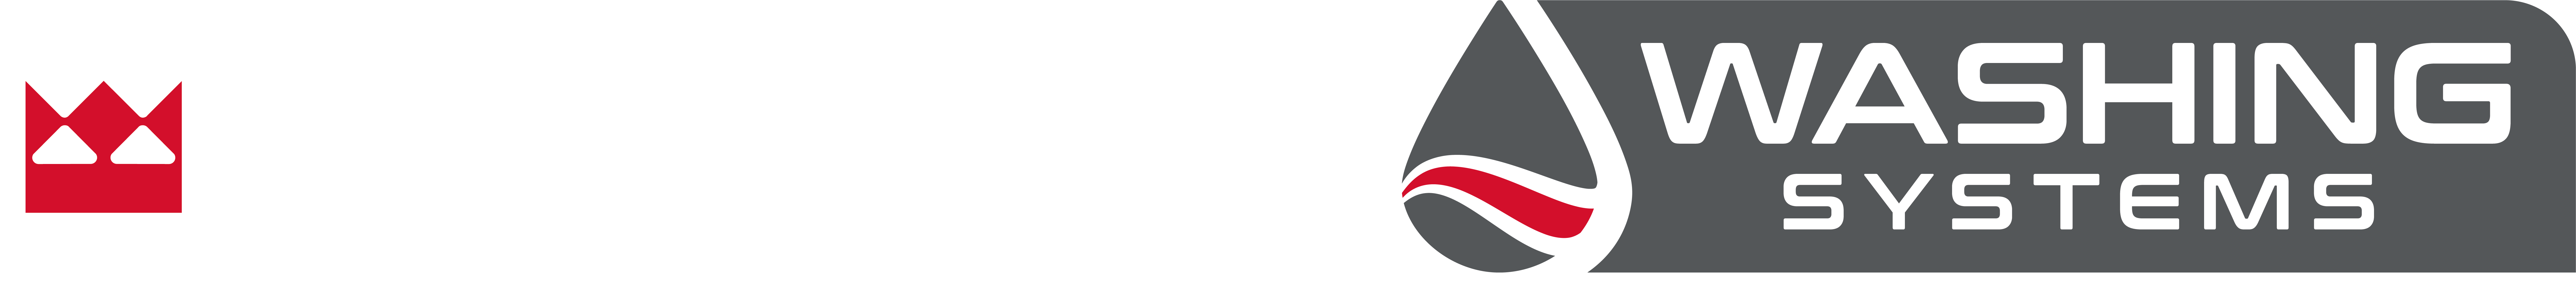 terex-washing-systems-logo